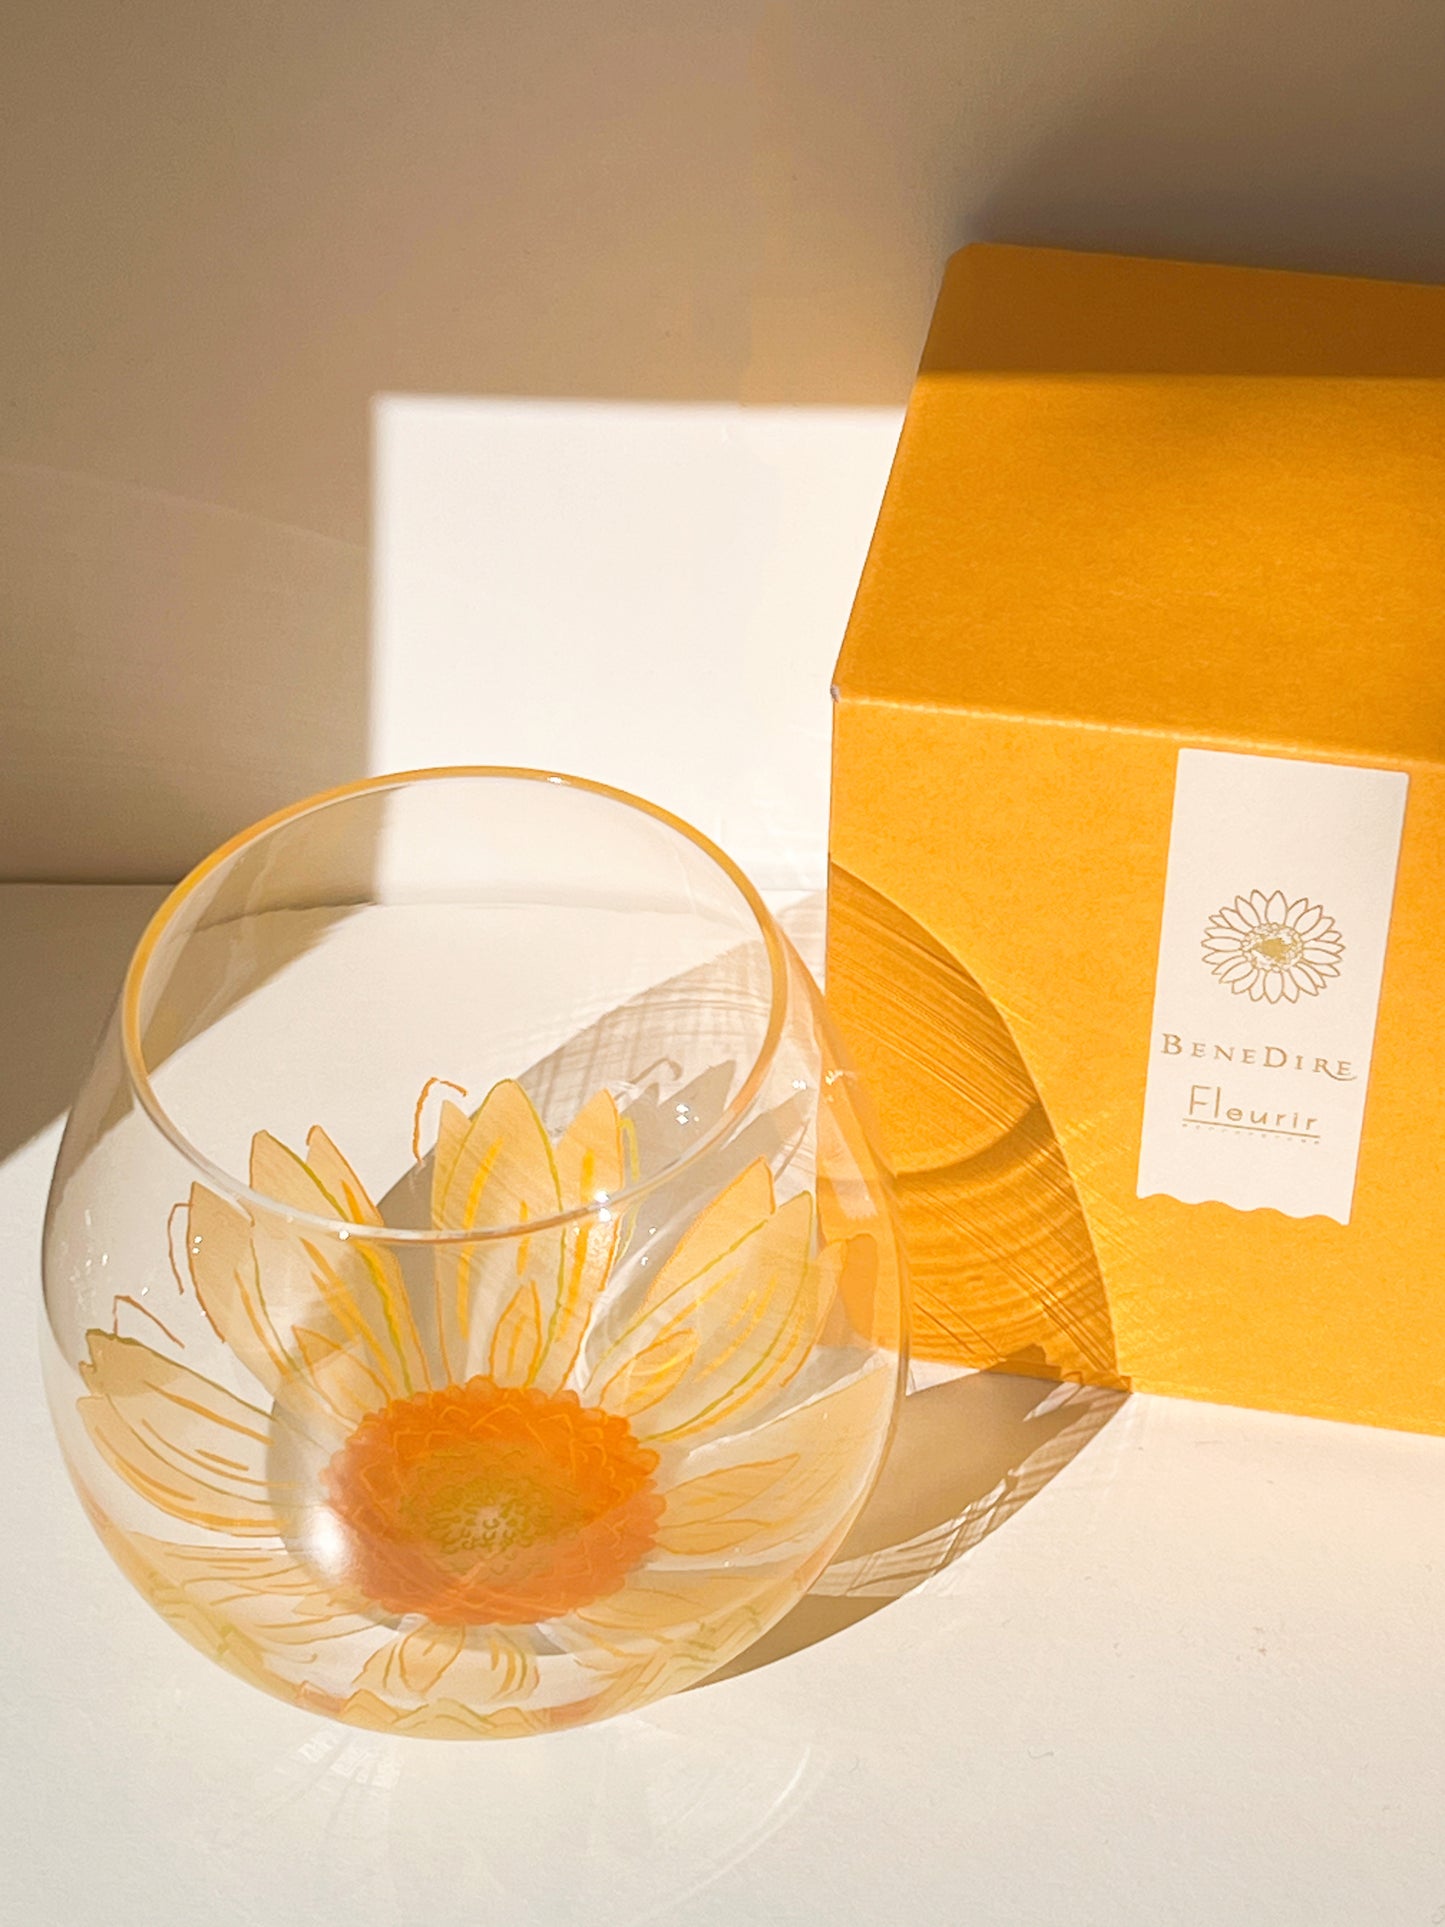 Toyo-sasaki Fleurir Flower Water Glass (rounded bottom)